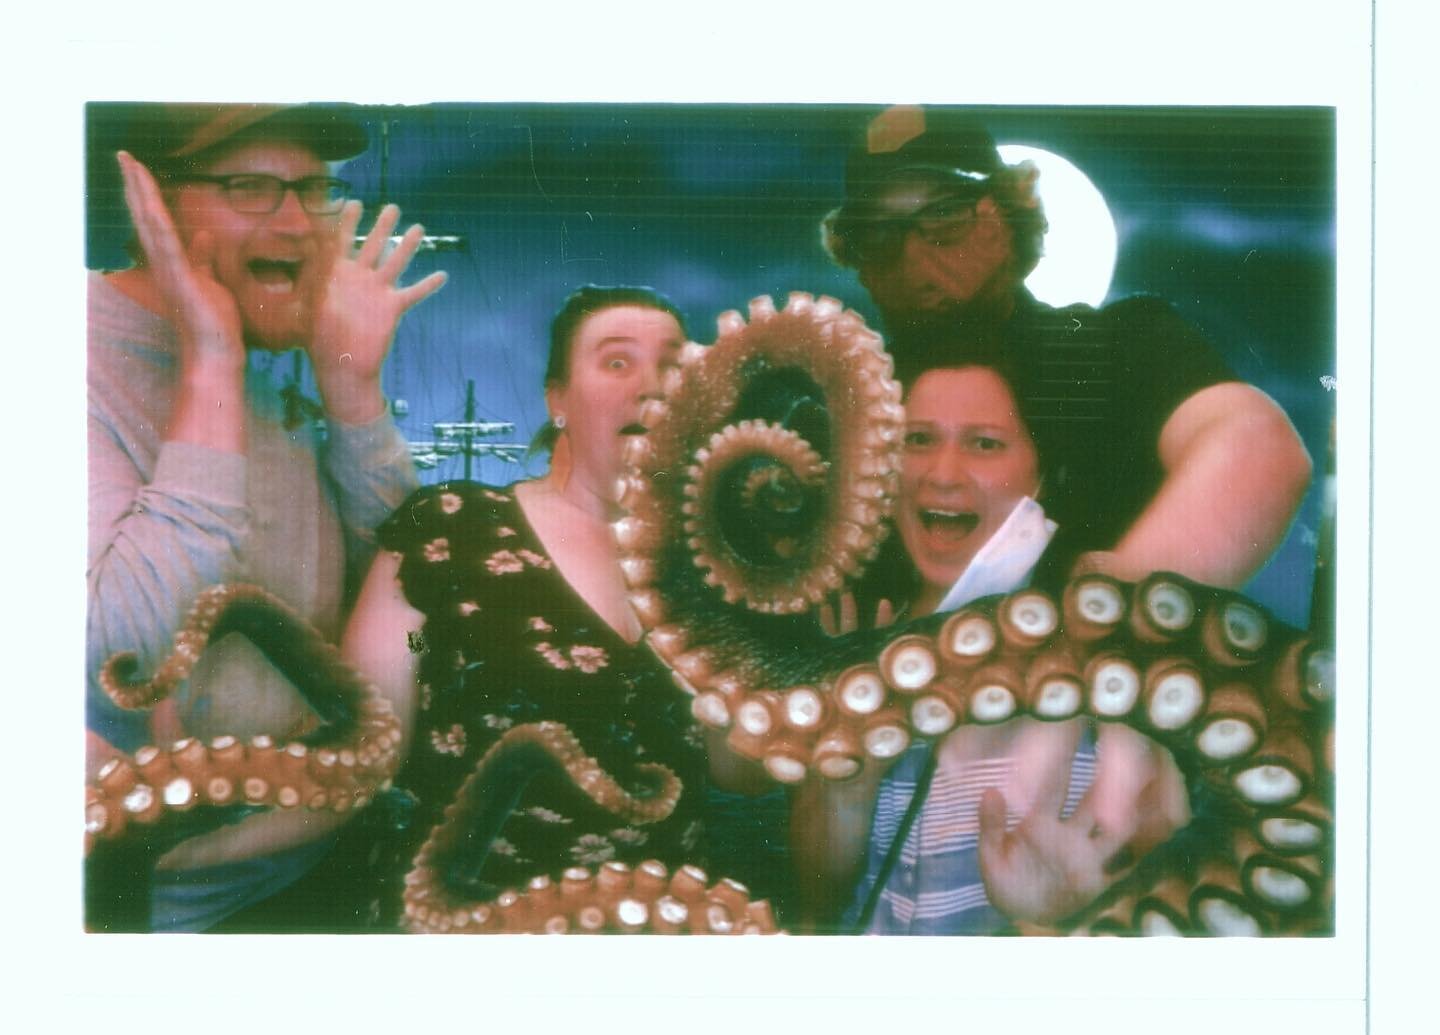 photobooth mischief at the roller rink #nostalgia #1998birthdayparty